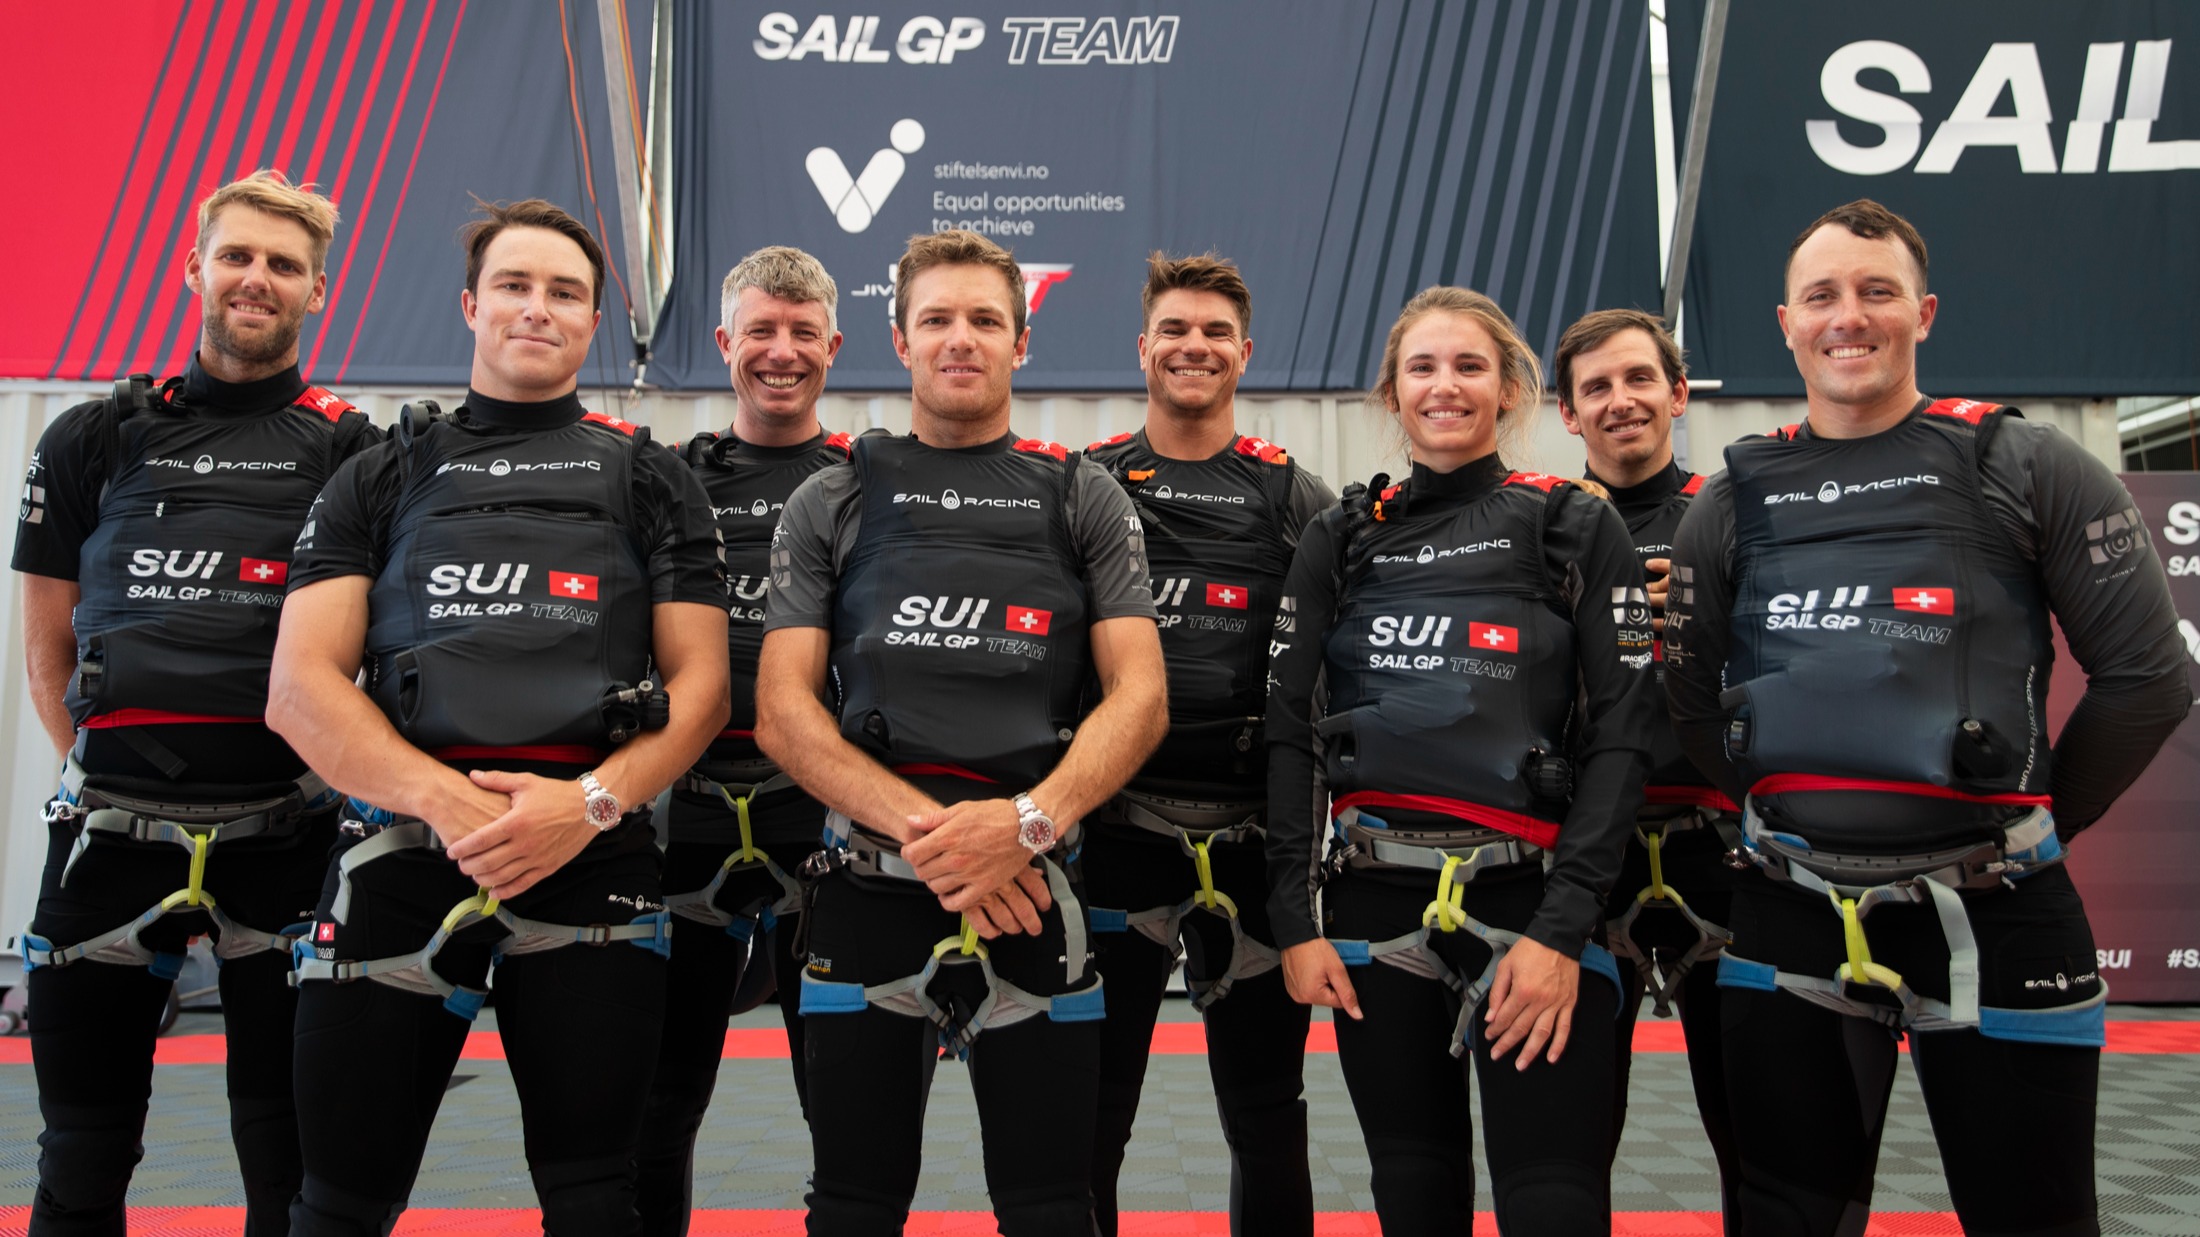 Switzerland SailGP Team | Crew Shot